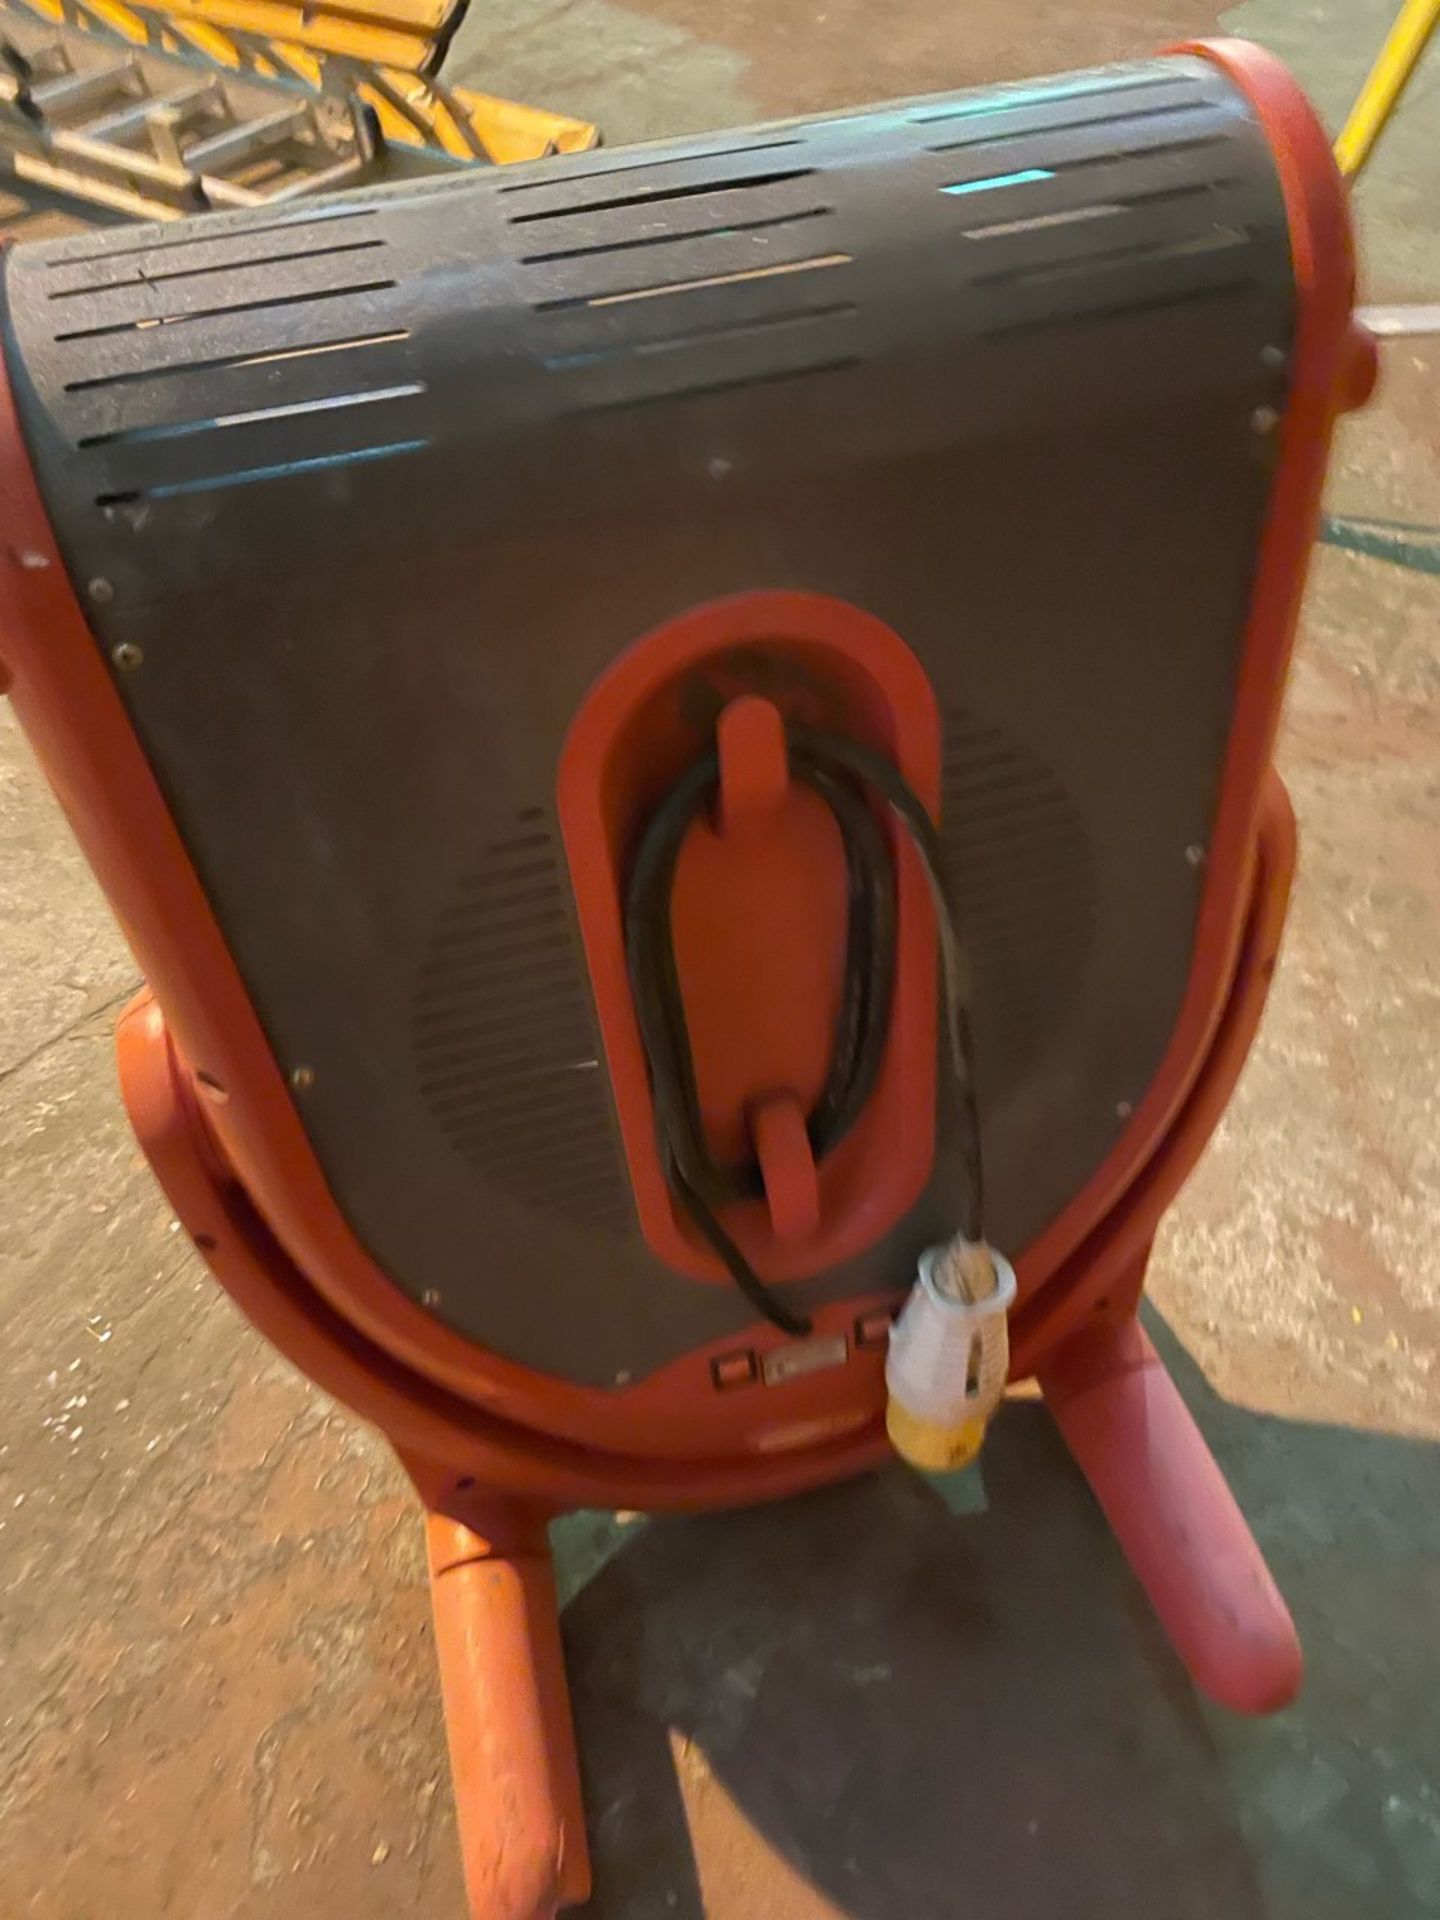 Elite heat infrared portable 110v heater. Needs new bulbs - Image 2 of 2